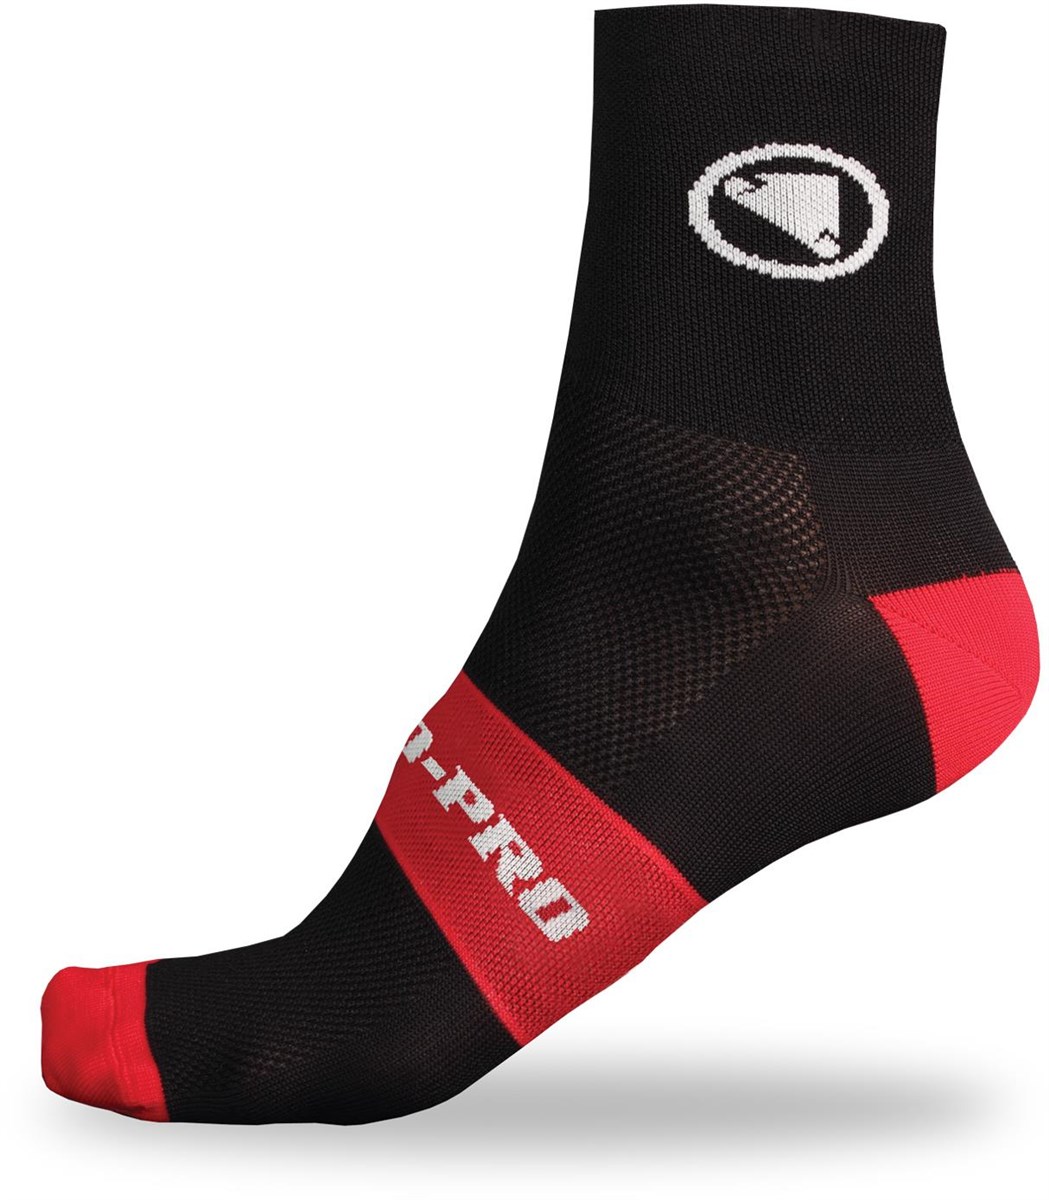 Endura FS260 Pro Cycling Socks product image